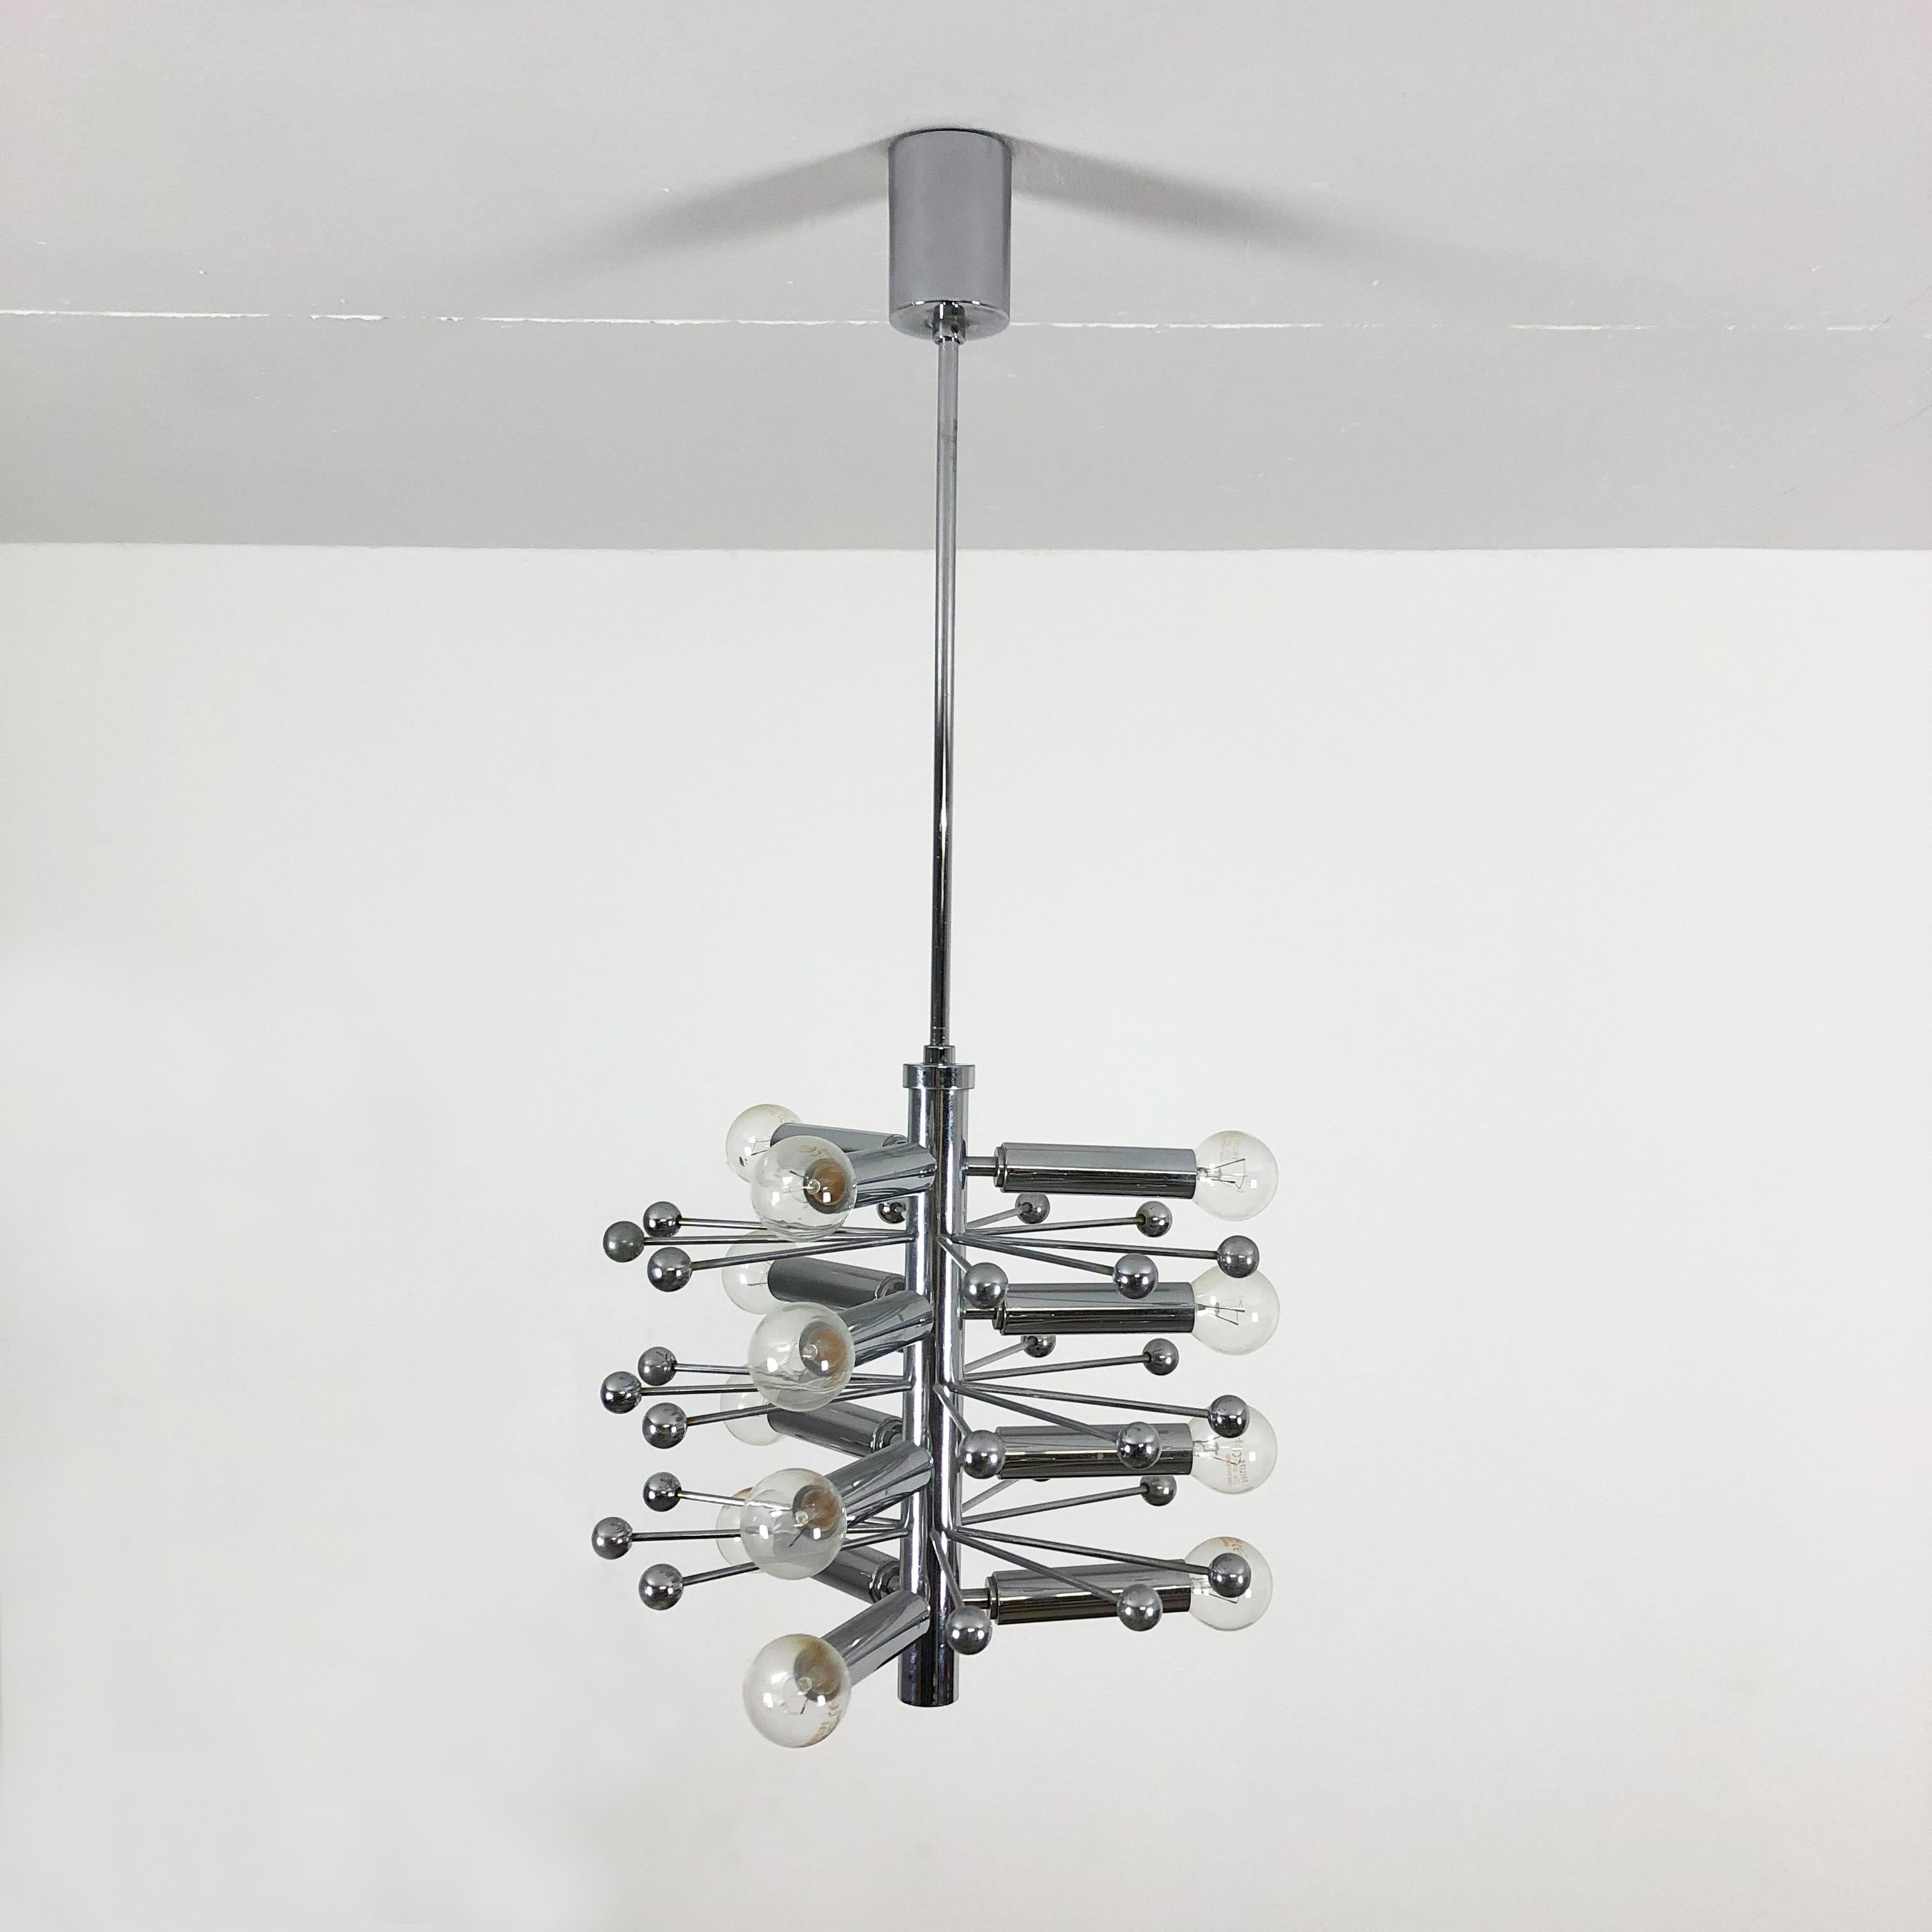 Mid-Century Modern Modernist Chrome Sputnik Hanging Light, Cosack Lights 1970s, Germany